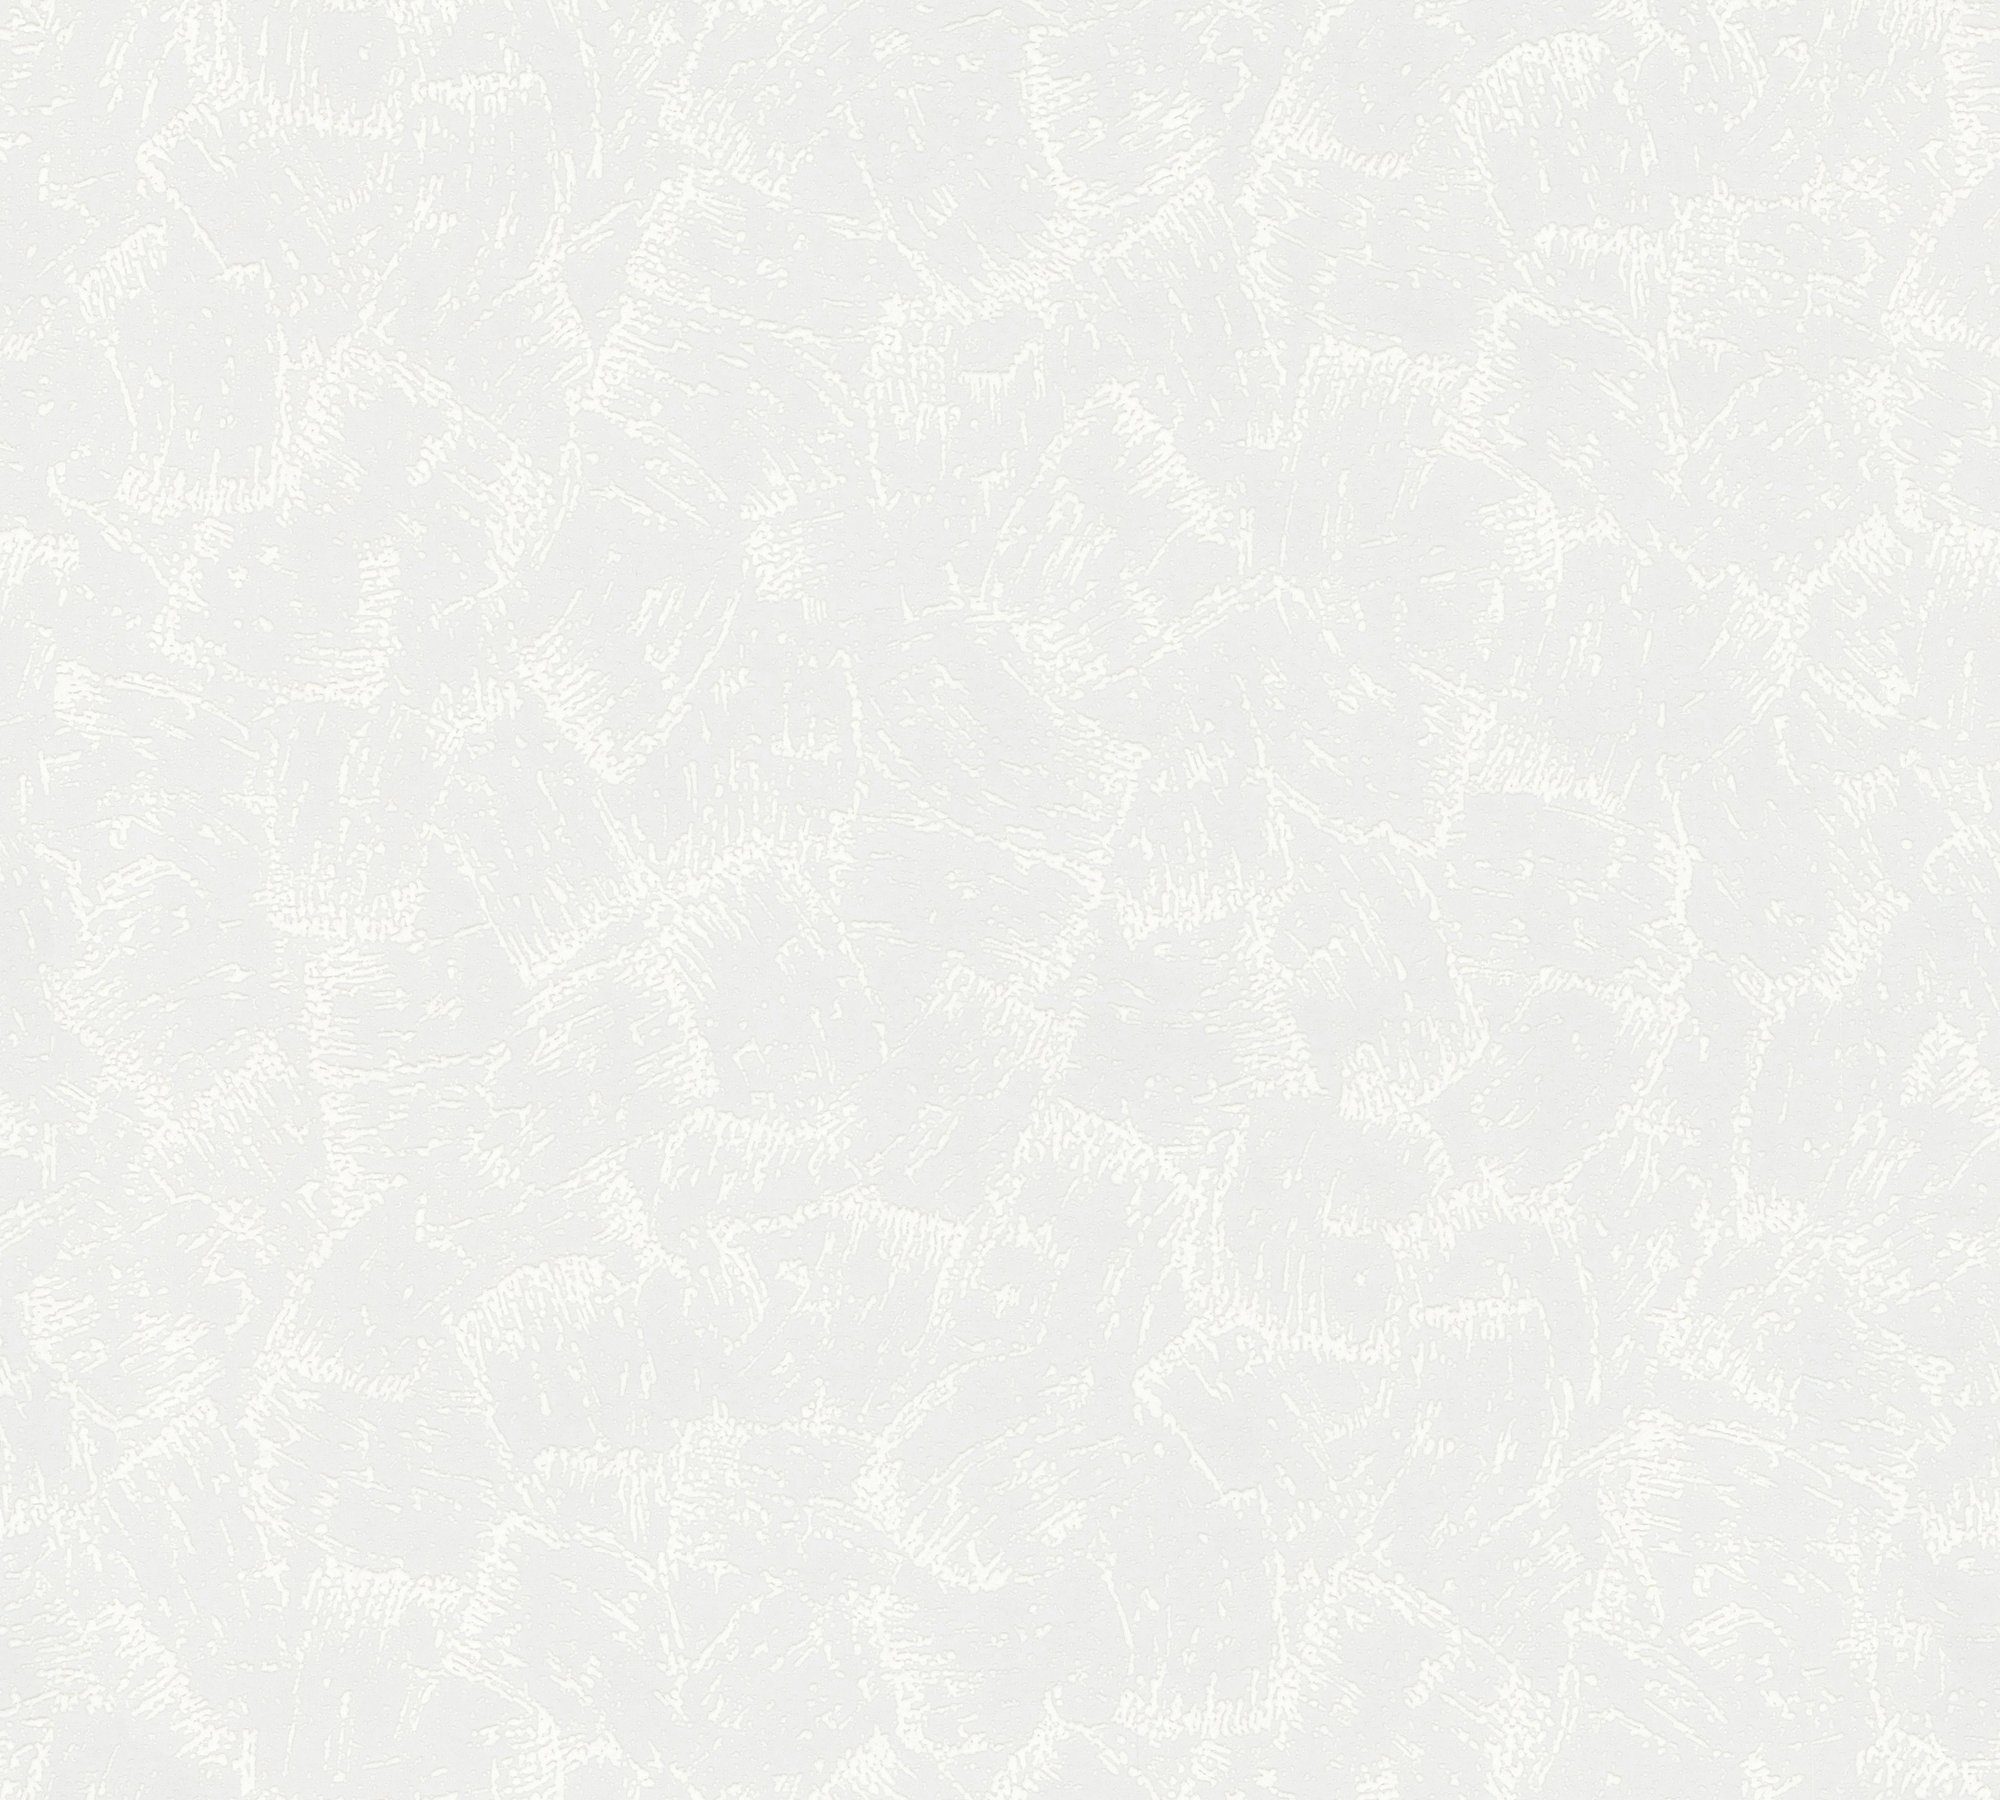 Einfarbig A.S. Simply einfarbig, White, Création Weiß Tapete Strukturtapete